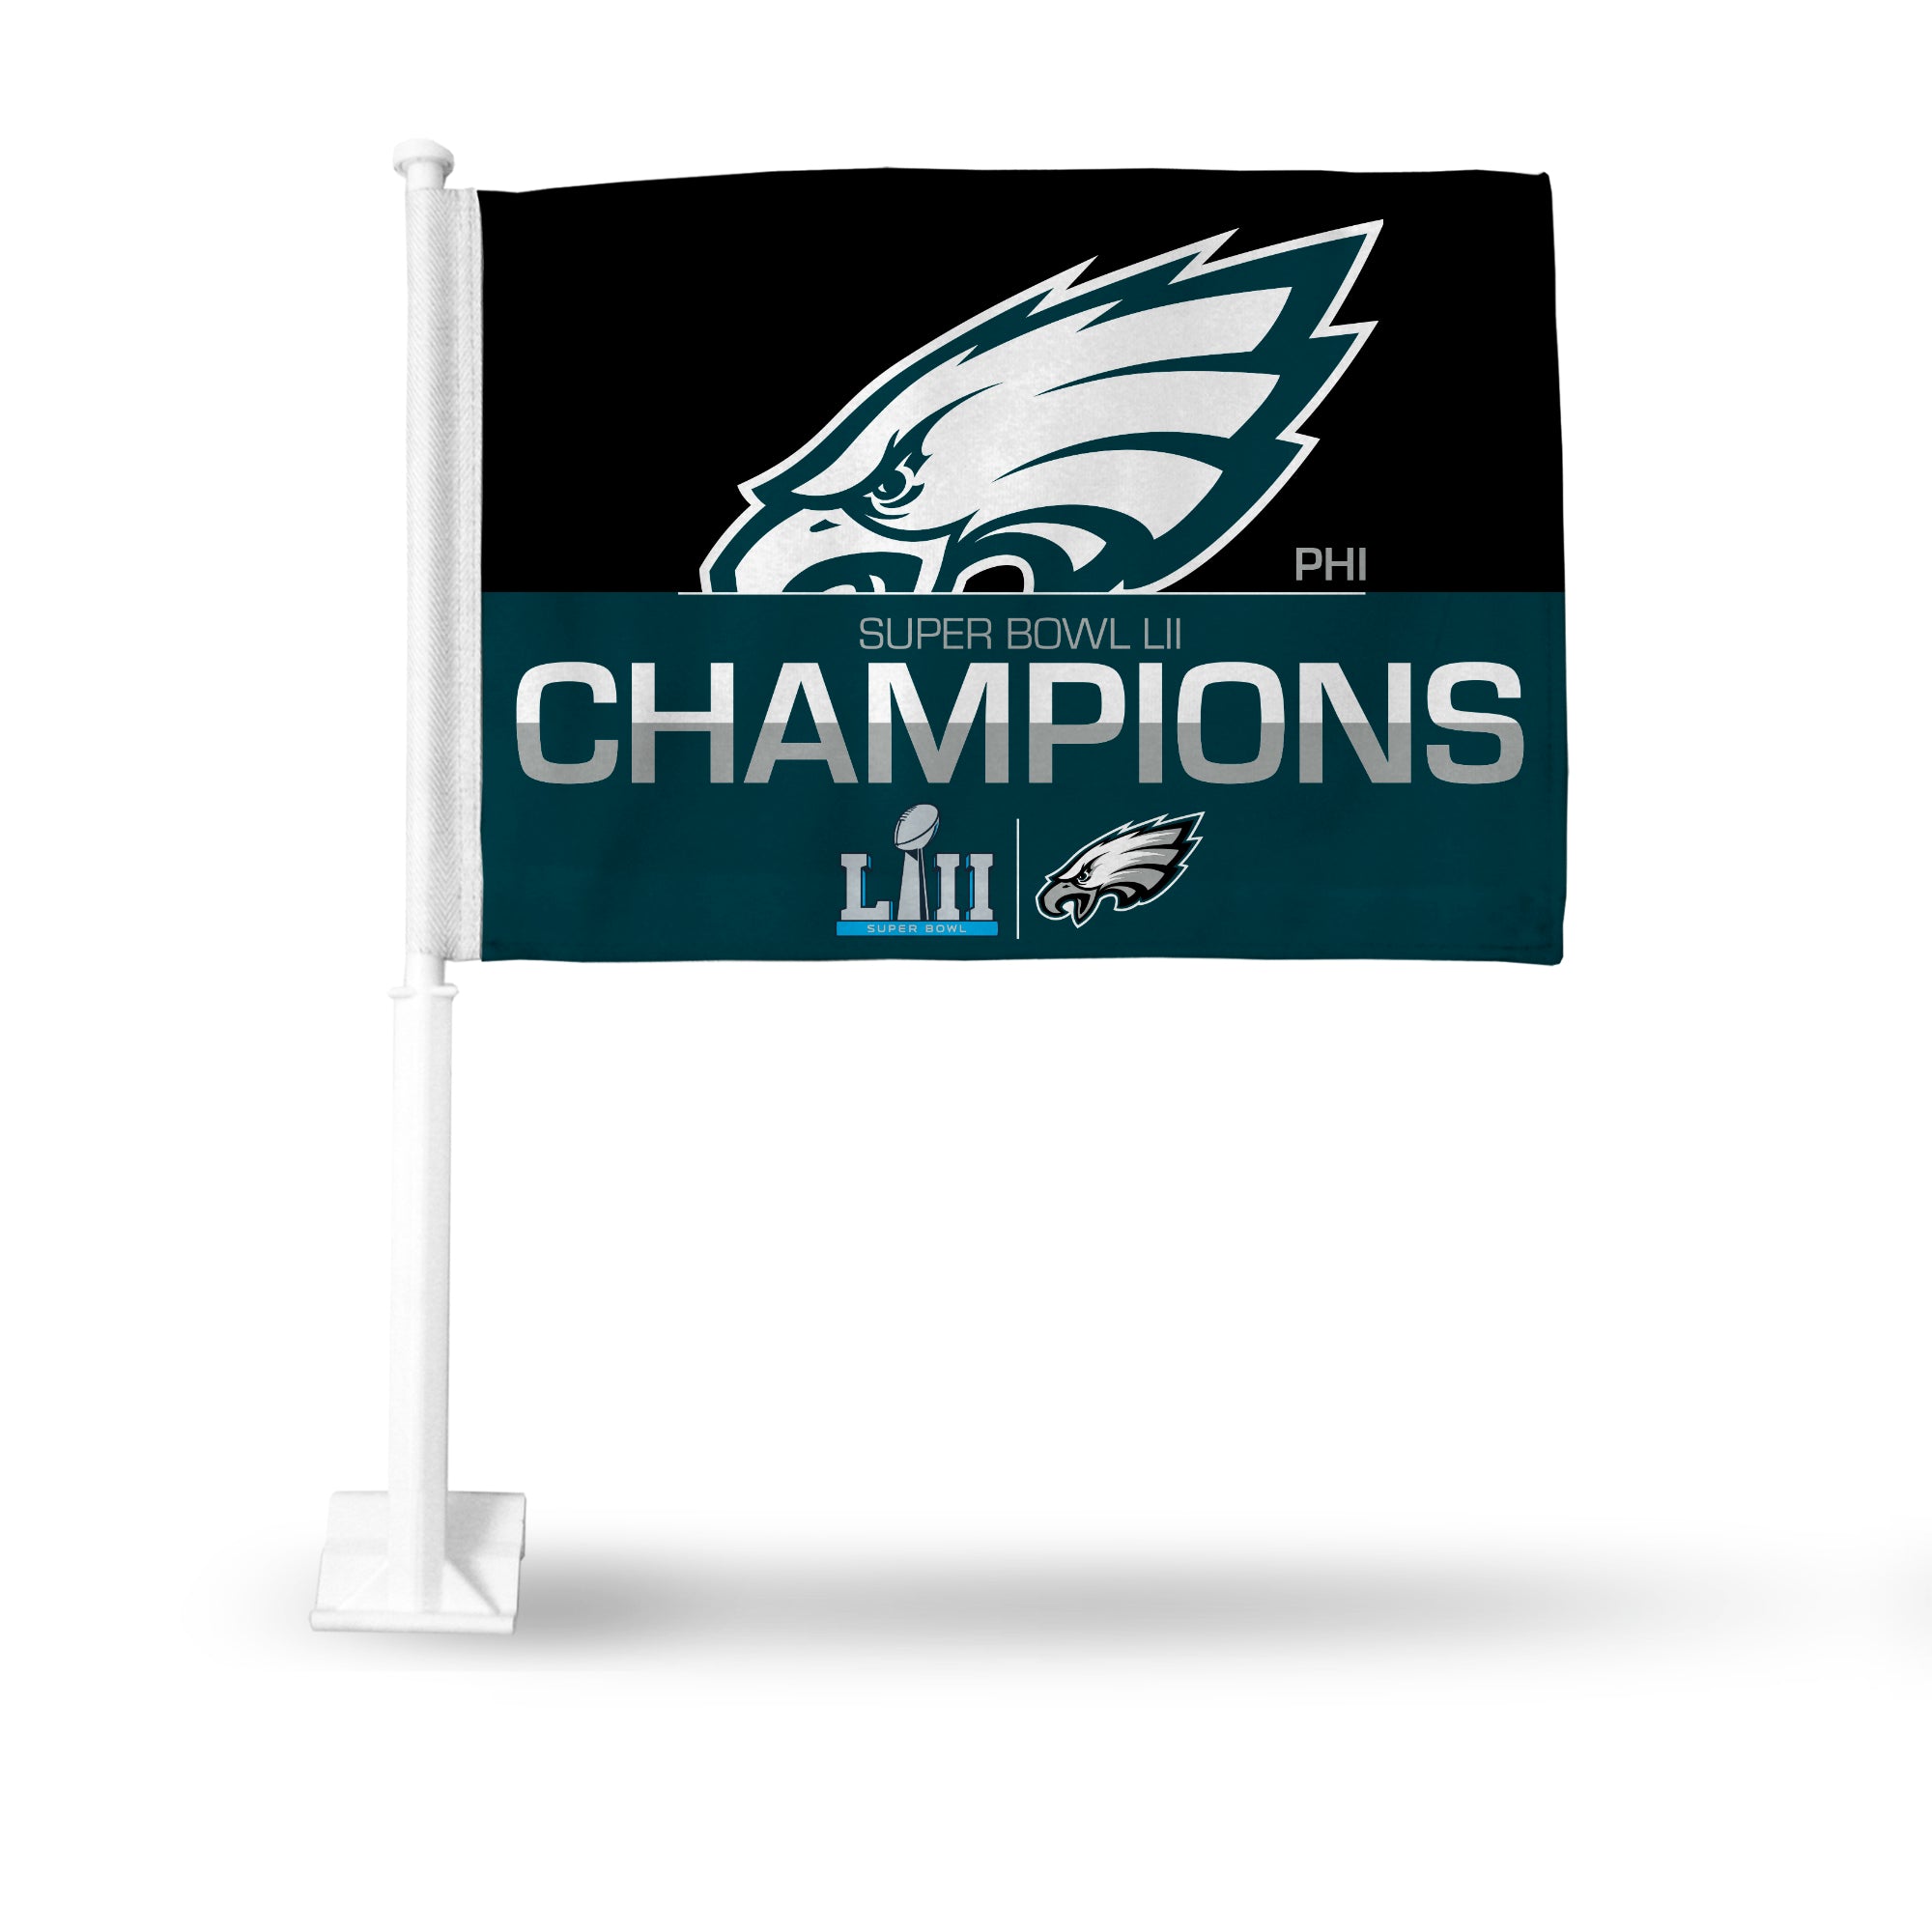  NFL Super Bowl LII Champions: The Philadelphia Eagles